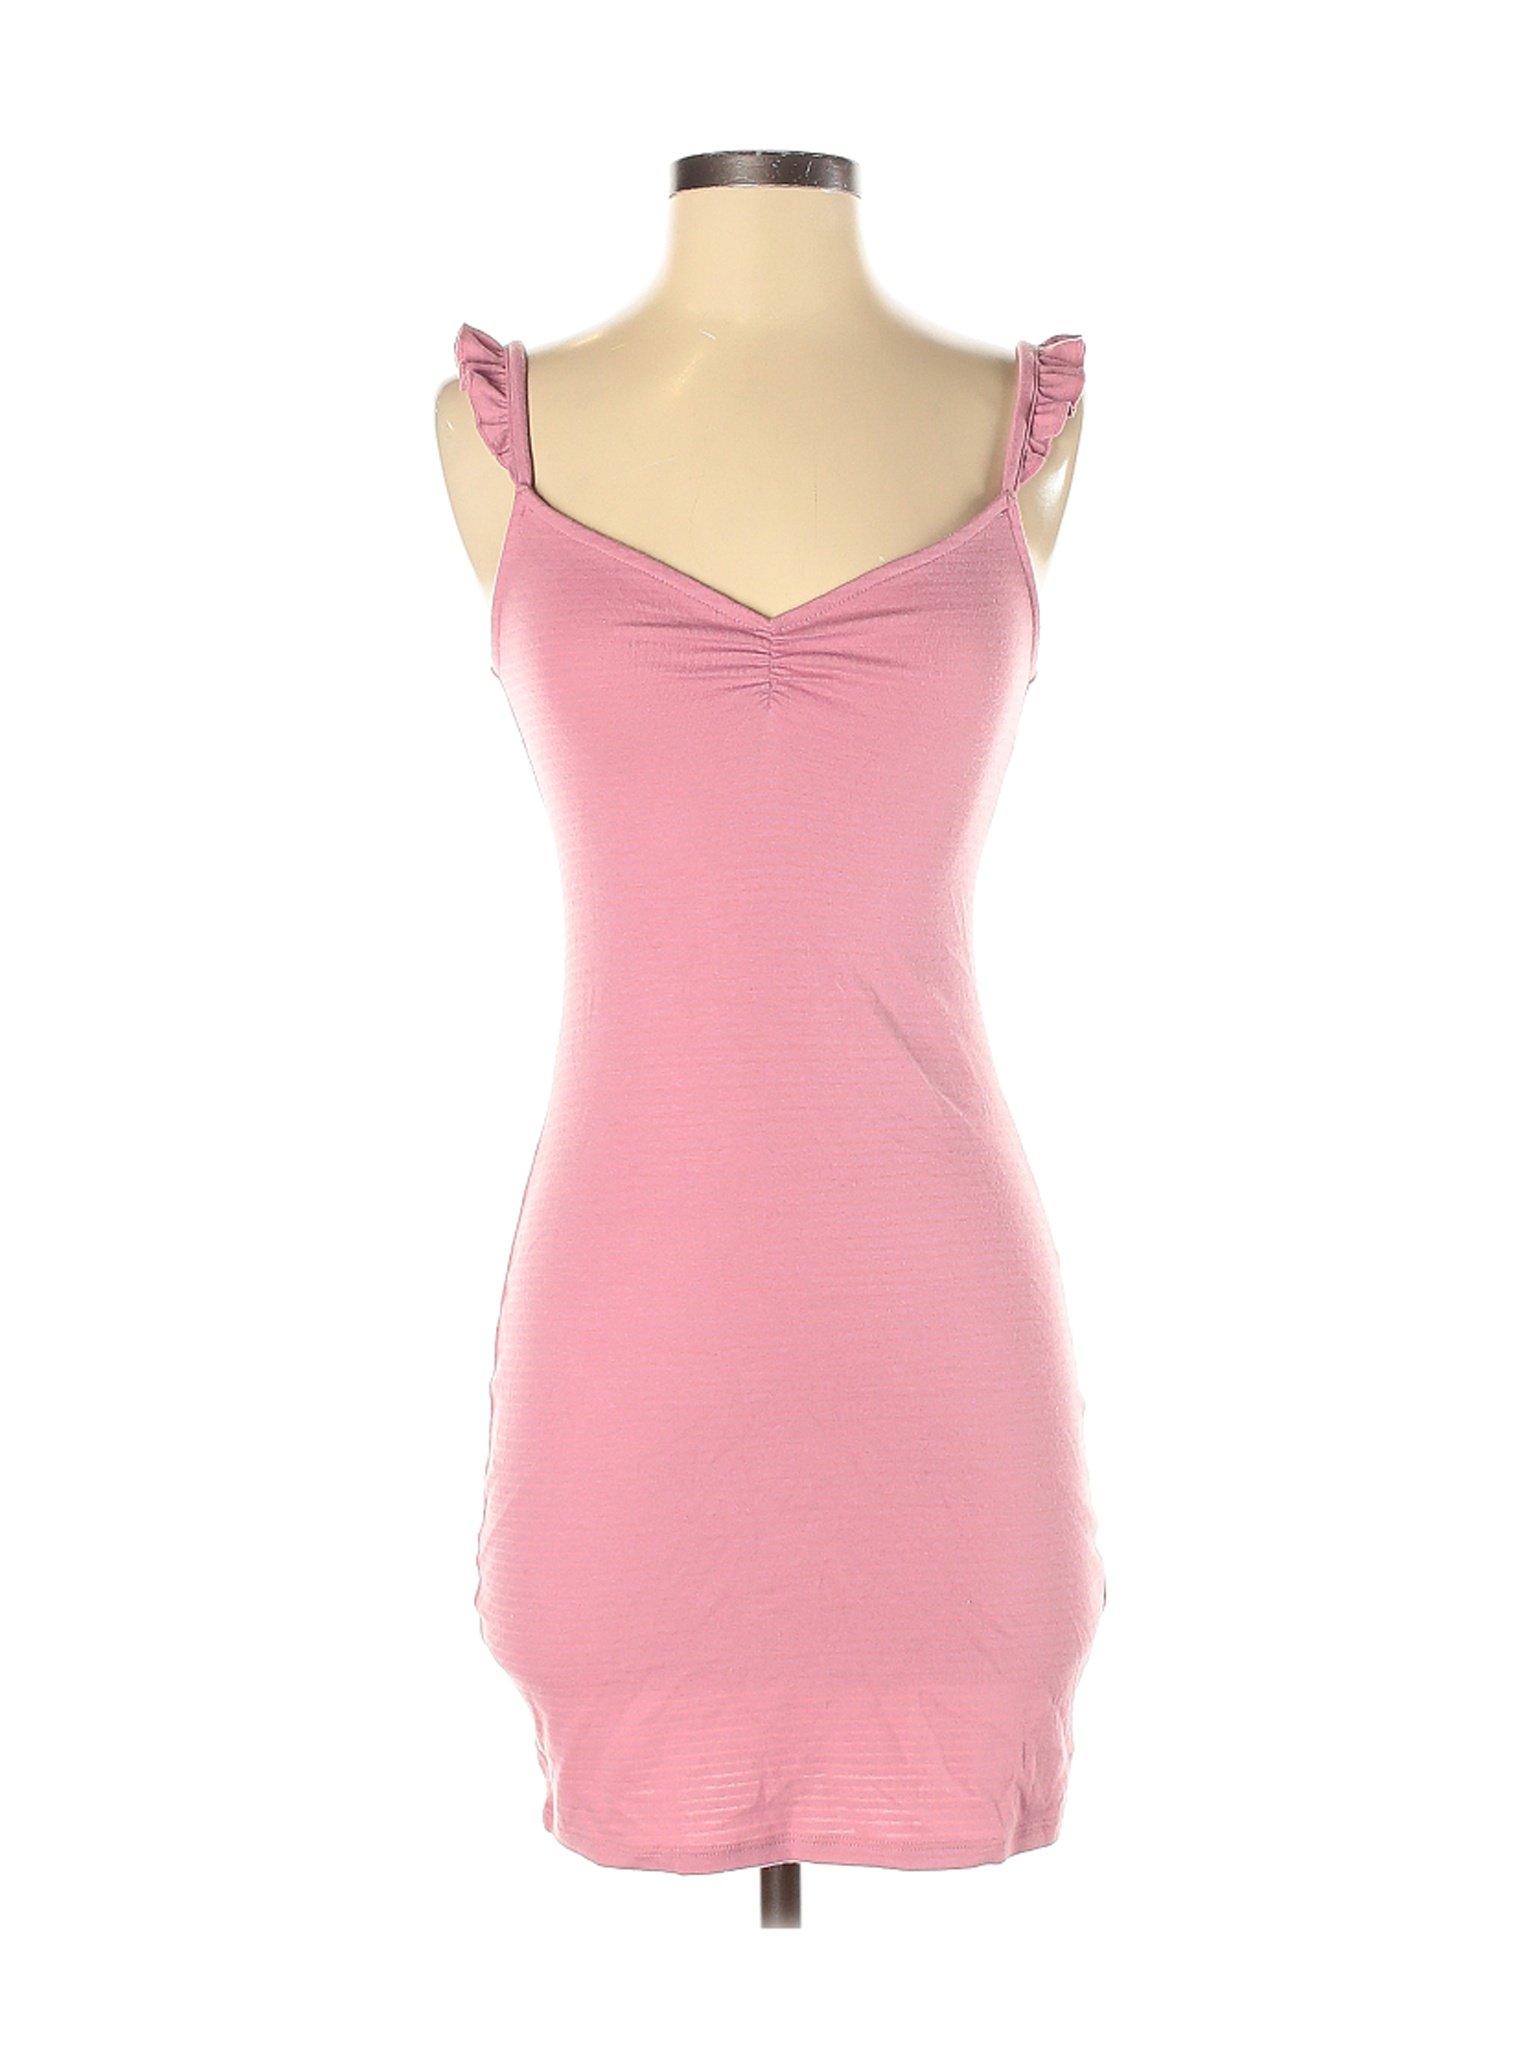 Abercrombie & Fitch Women Pink Casual Dress XS Petites | eBay